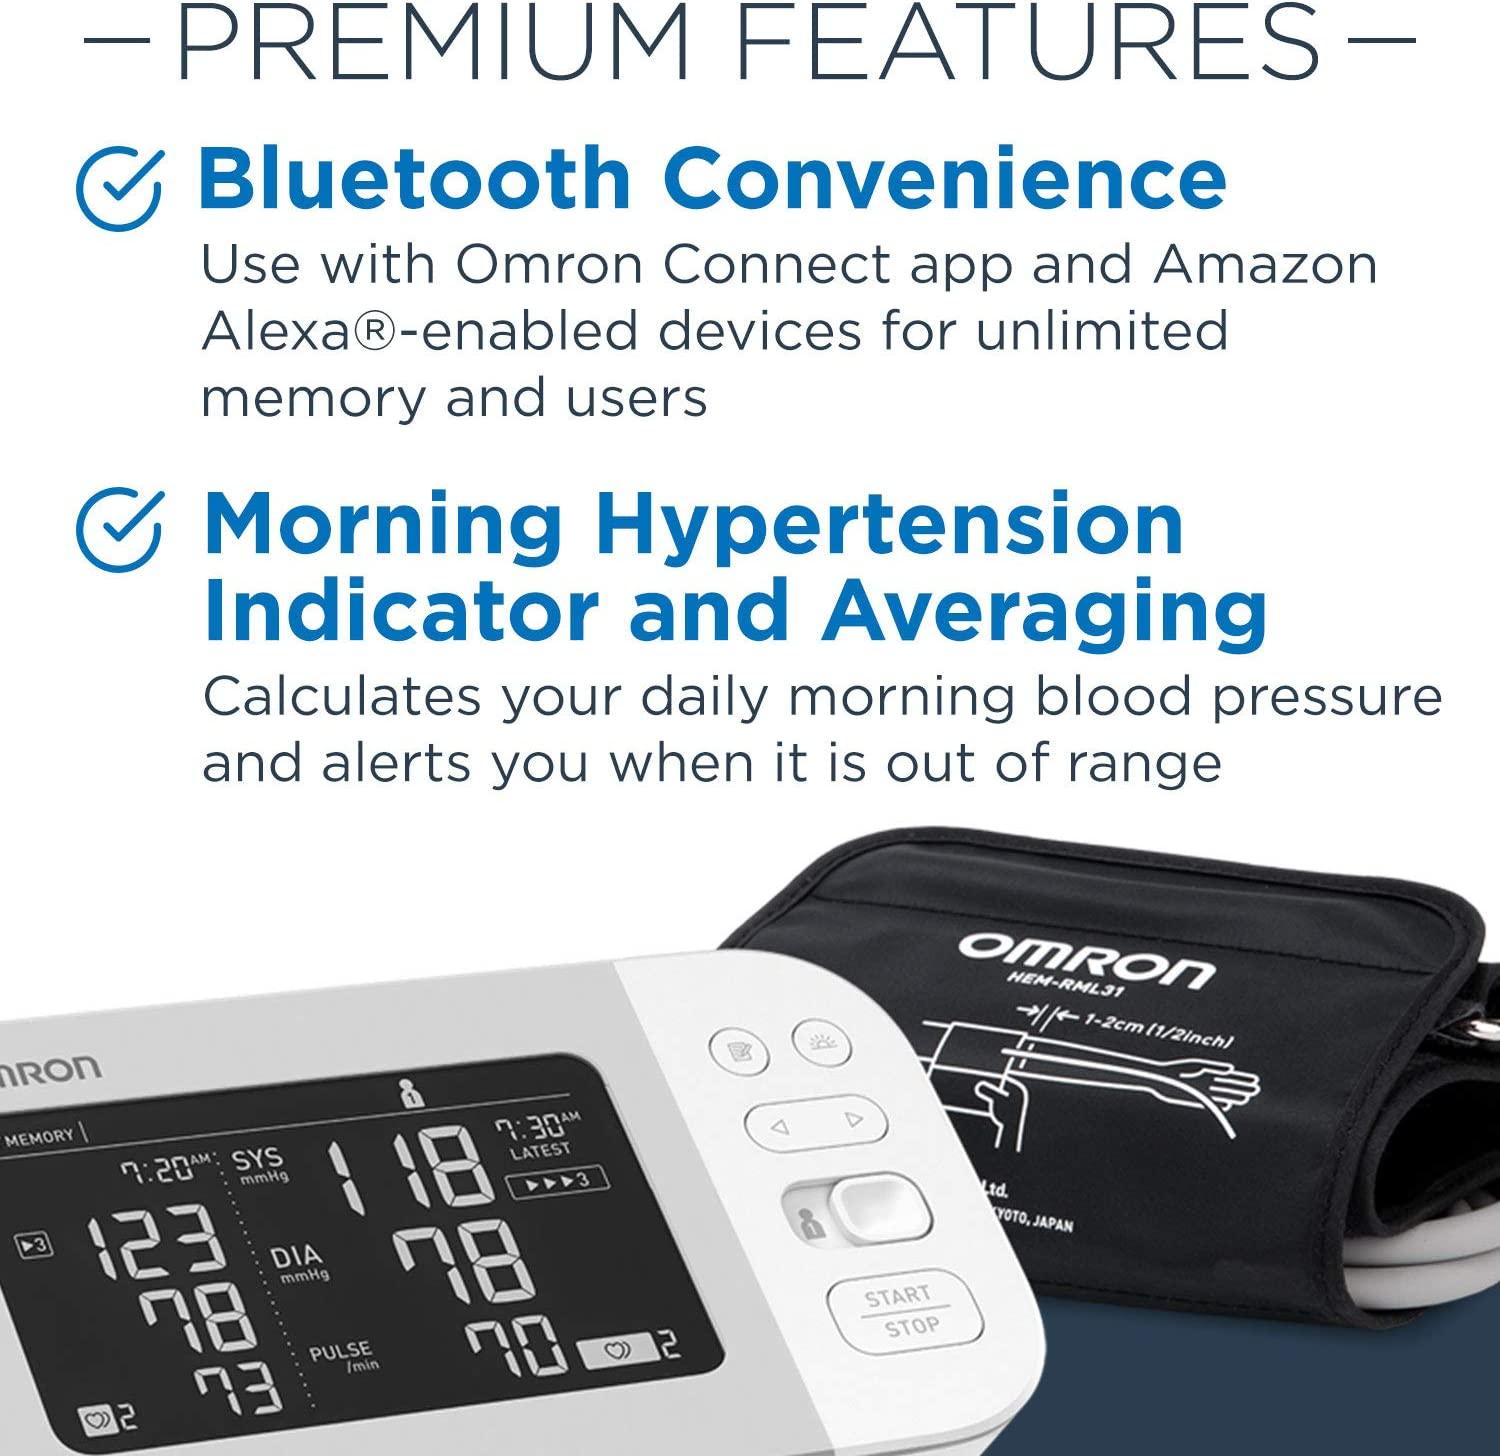 Omron 10 Series Wireless Wrist Blood Pressure Monitor